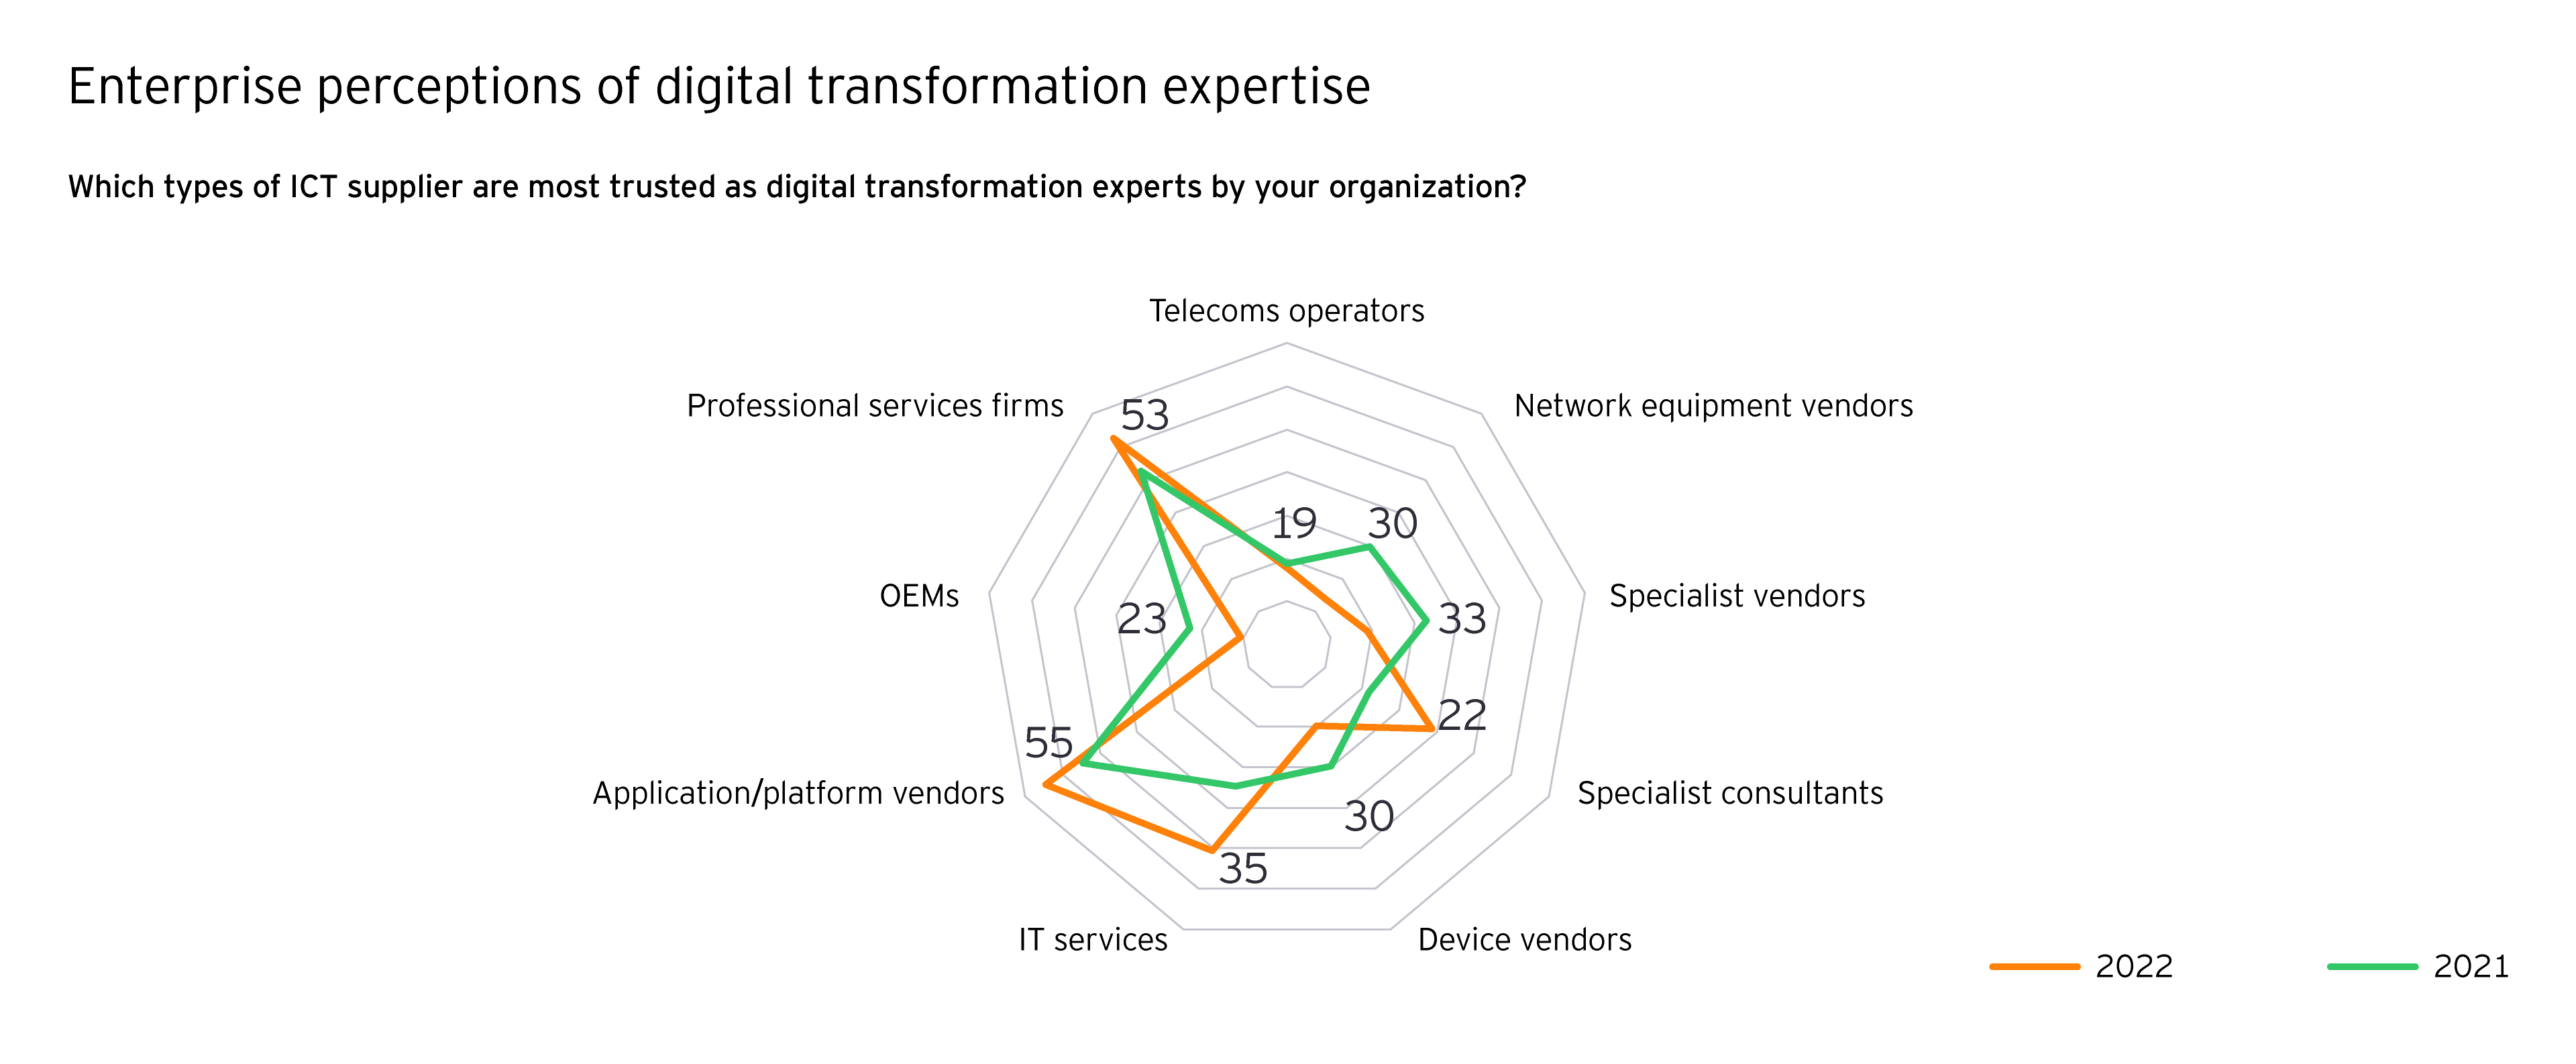 Enterprise perceptions of digital transformation expertise